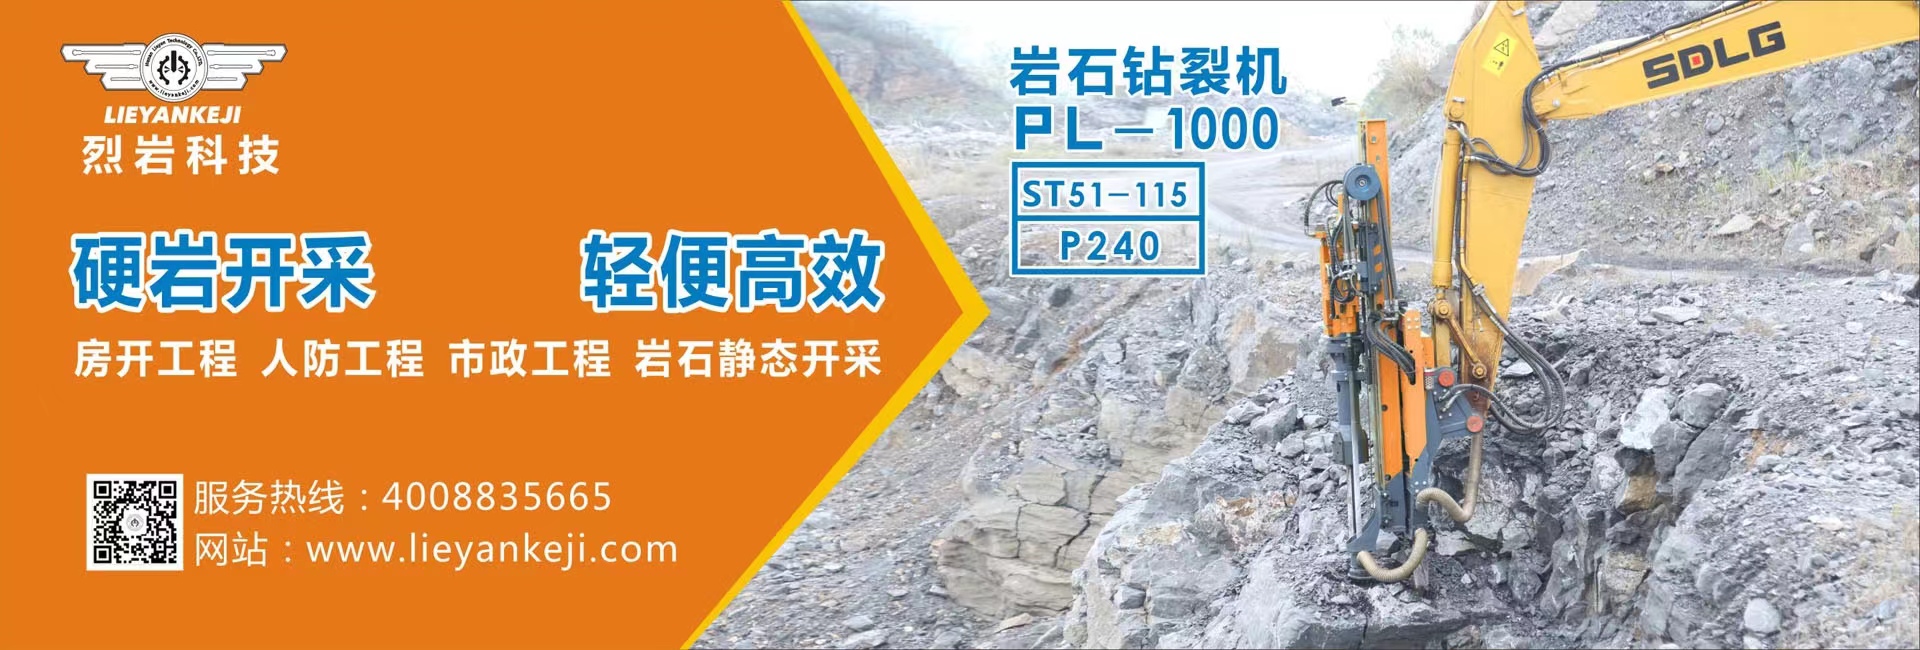 PL-1000岩石钻进分裂设备制造商